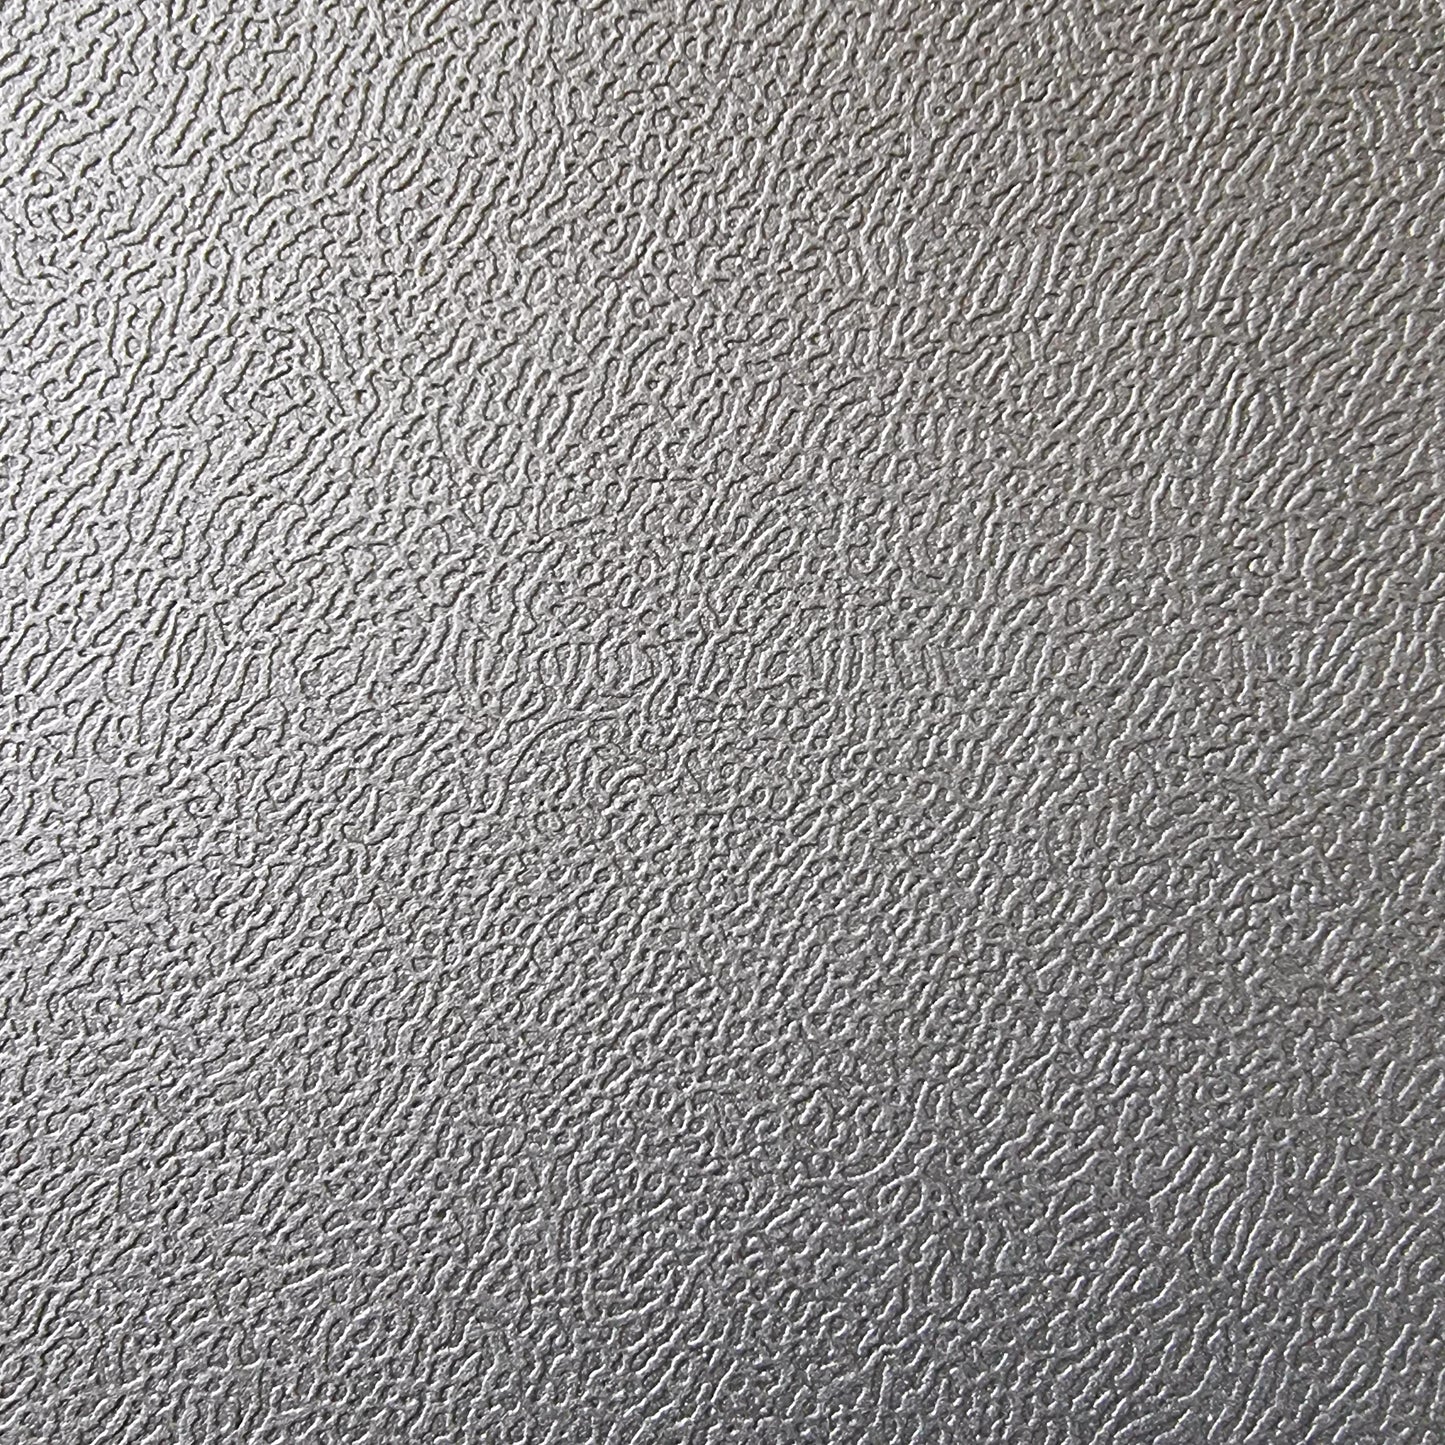 3mm Textured EVA Foam by Craft Knight